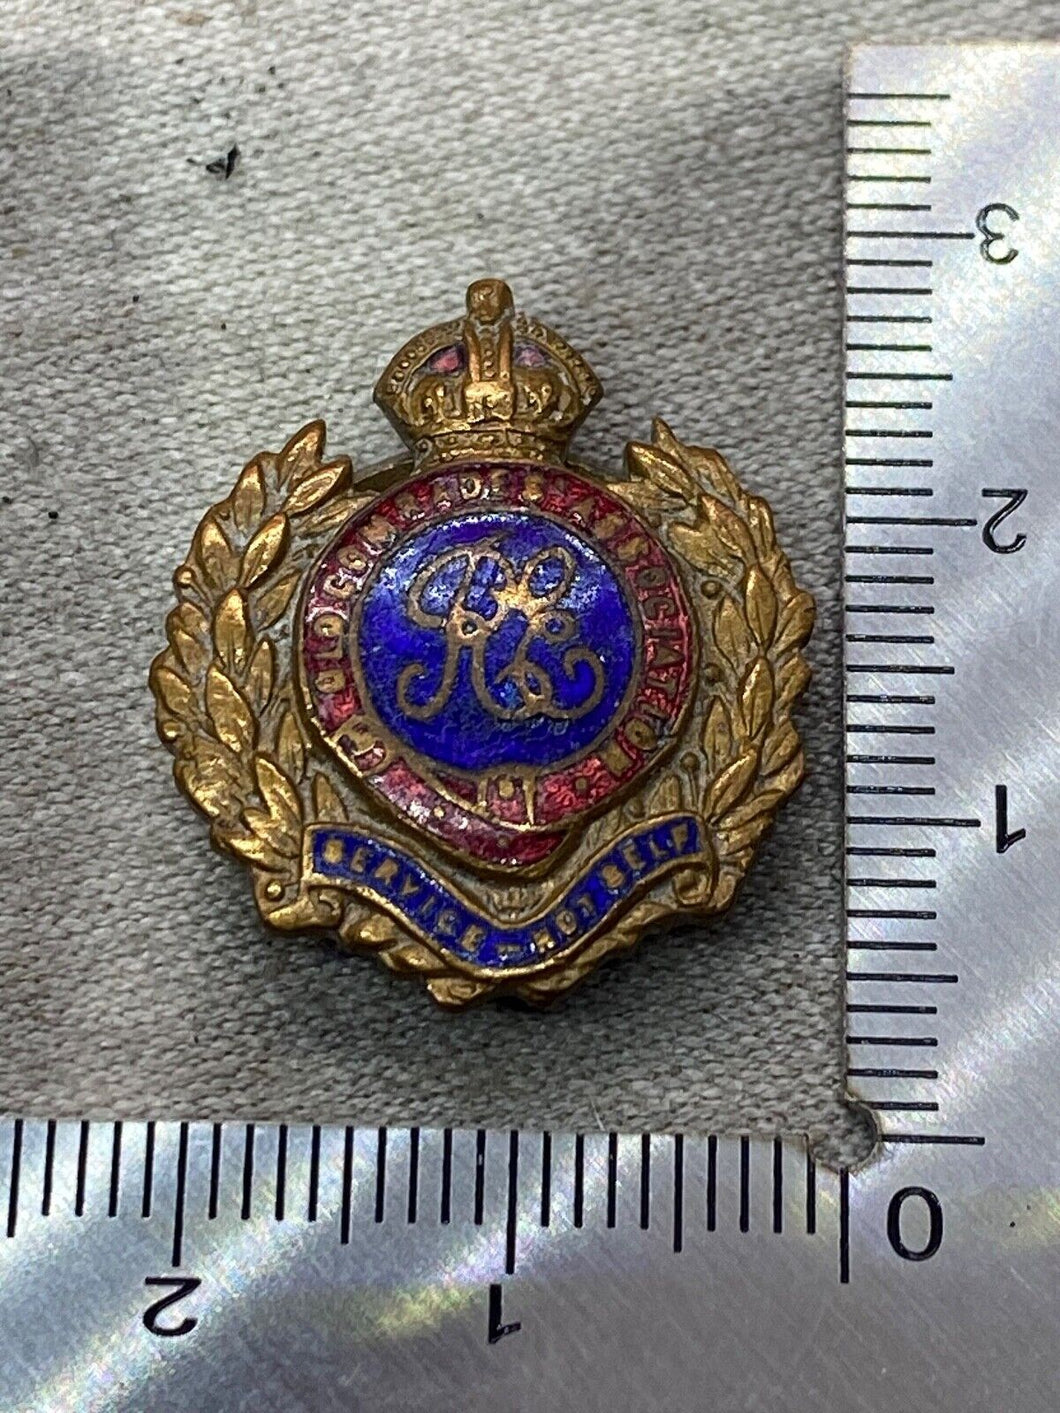 Original British Army - Royal Engineers Enamel Brooch / Lapel Badge